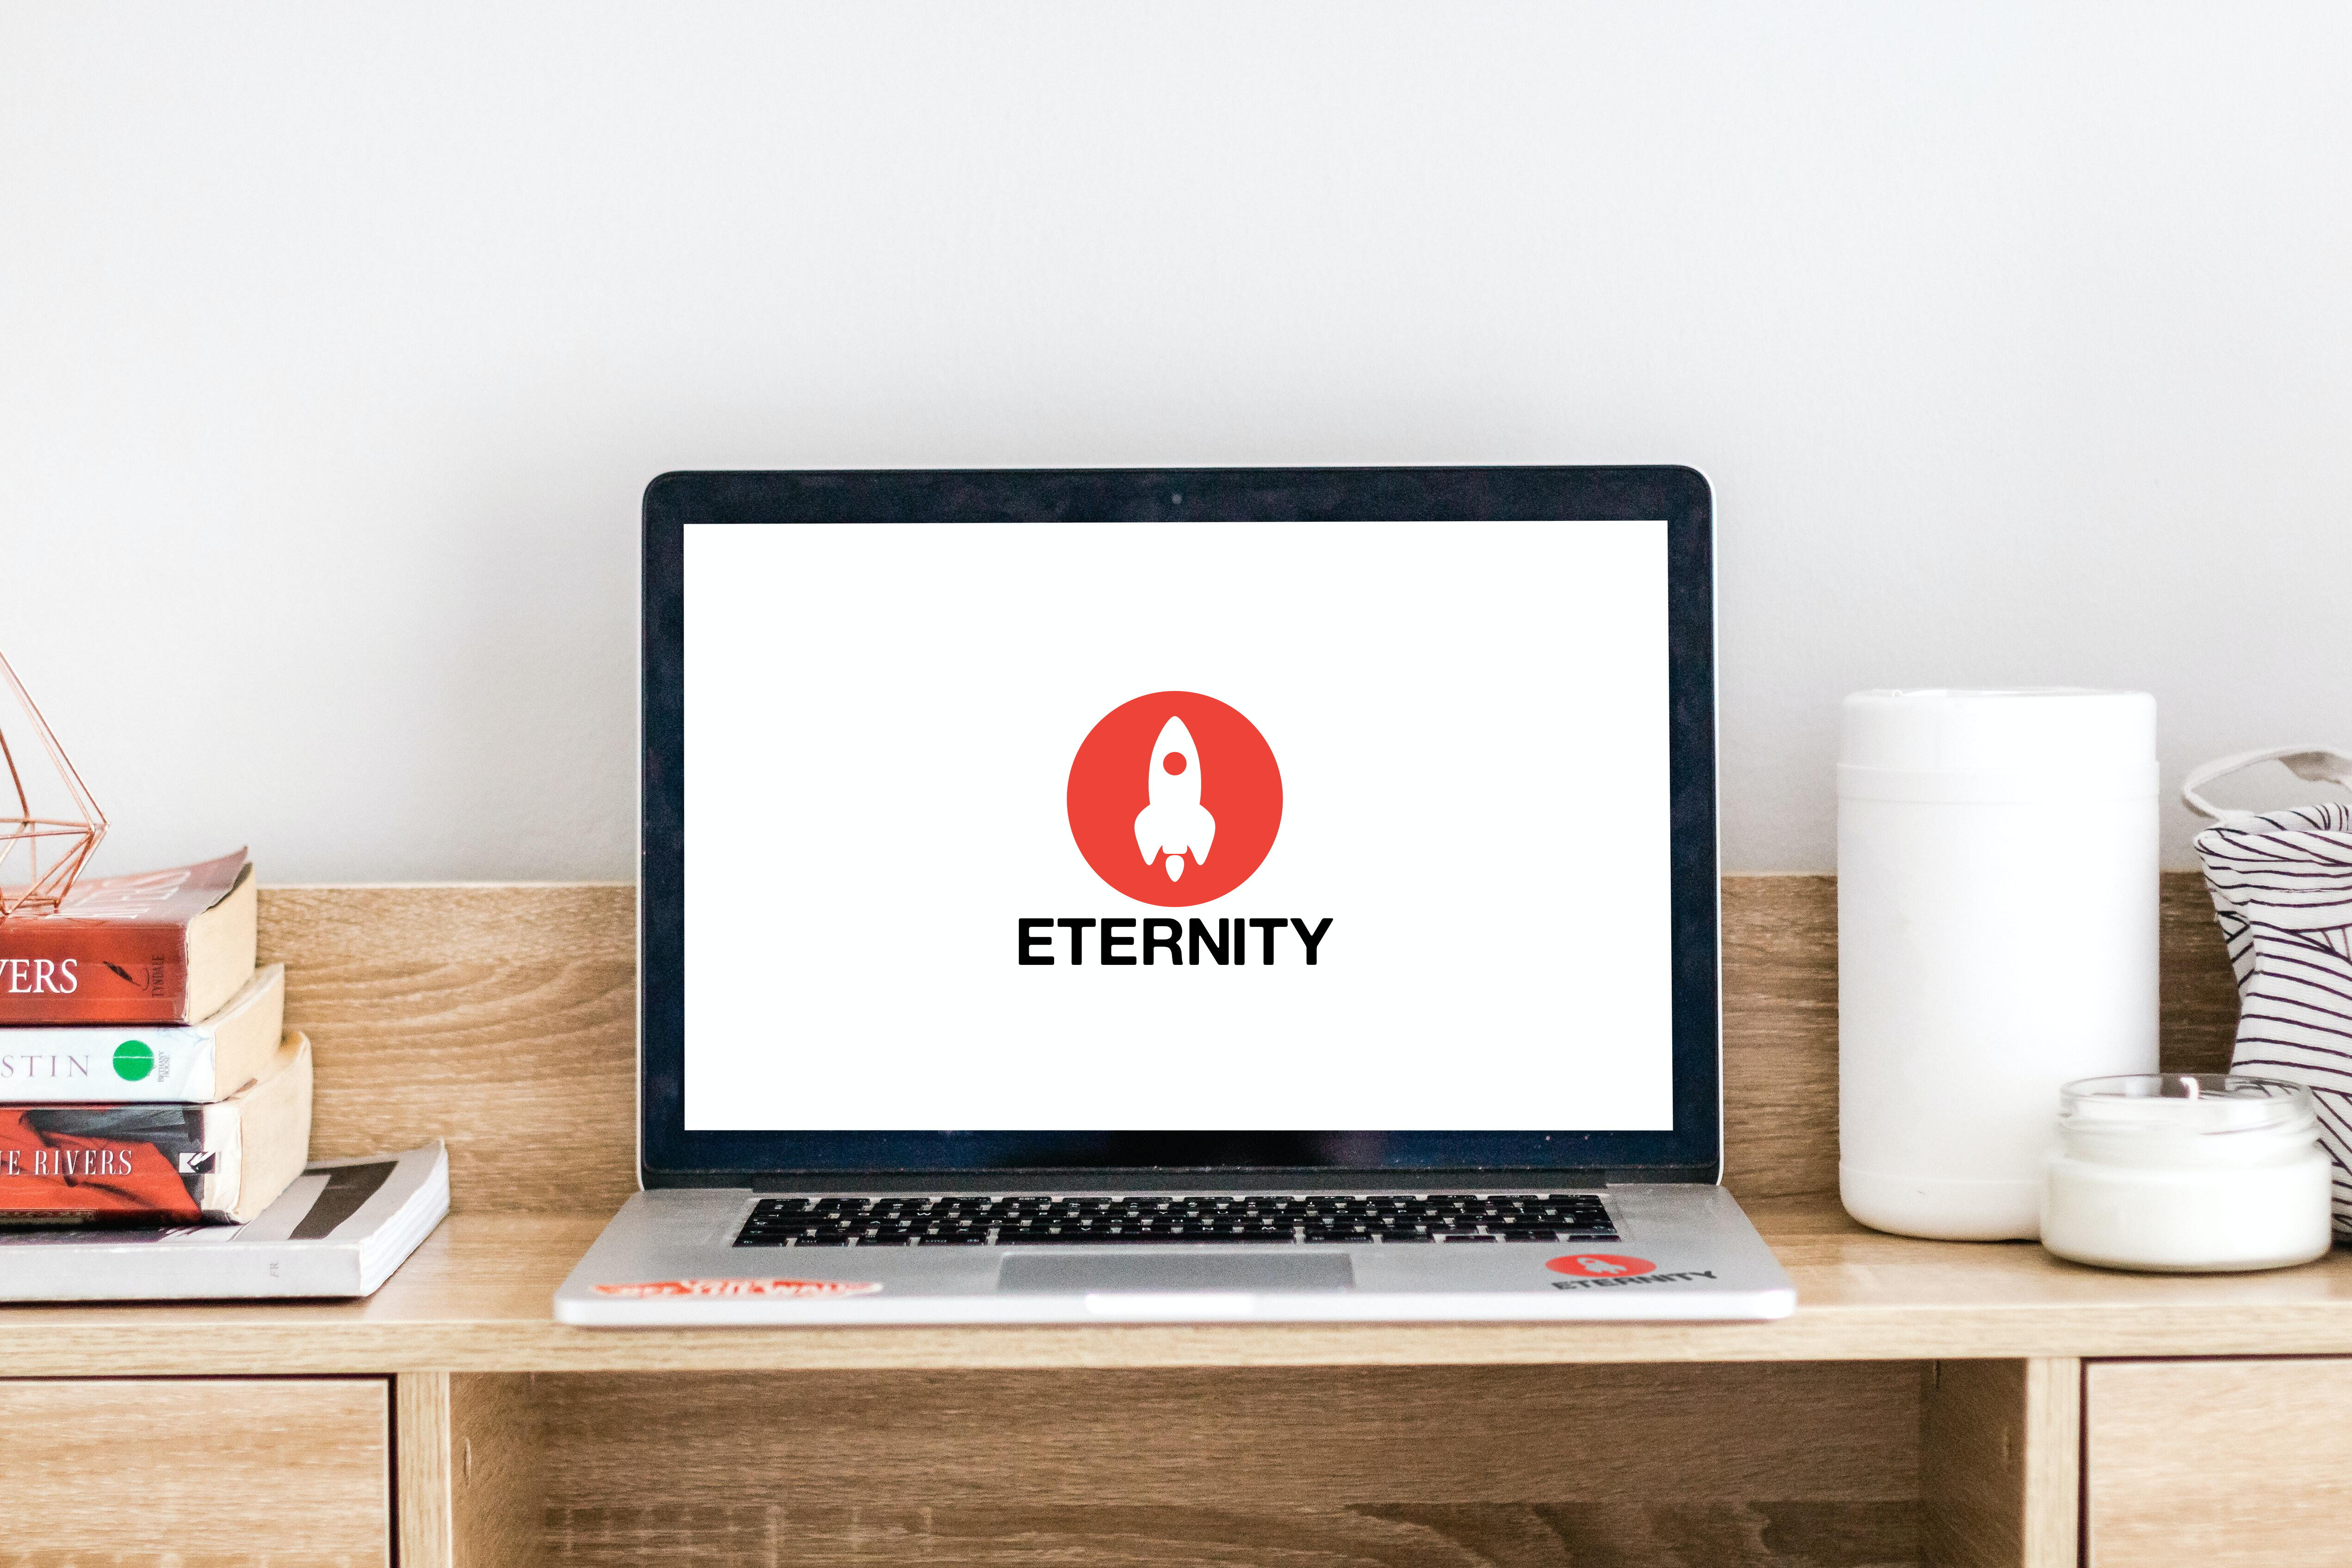 Eternity marketing logo on computer